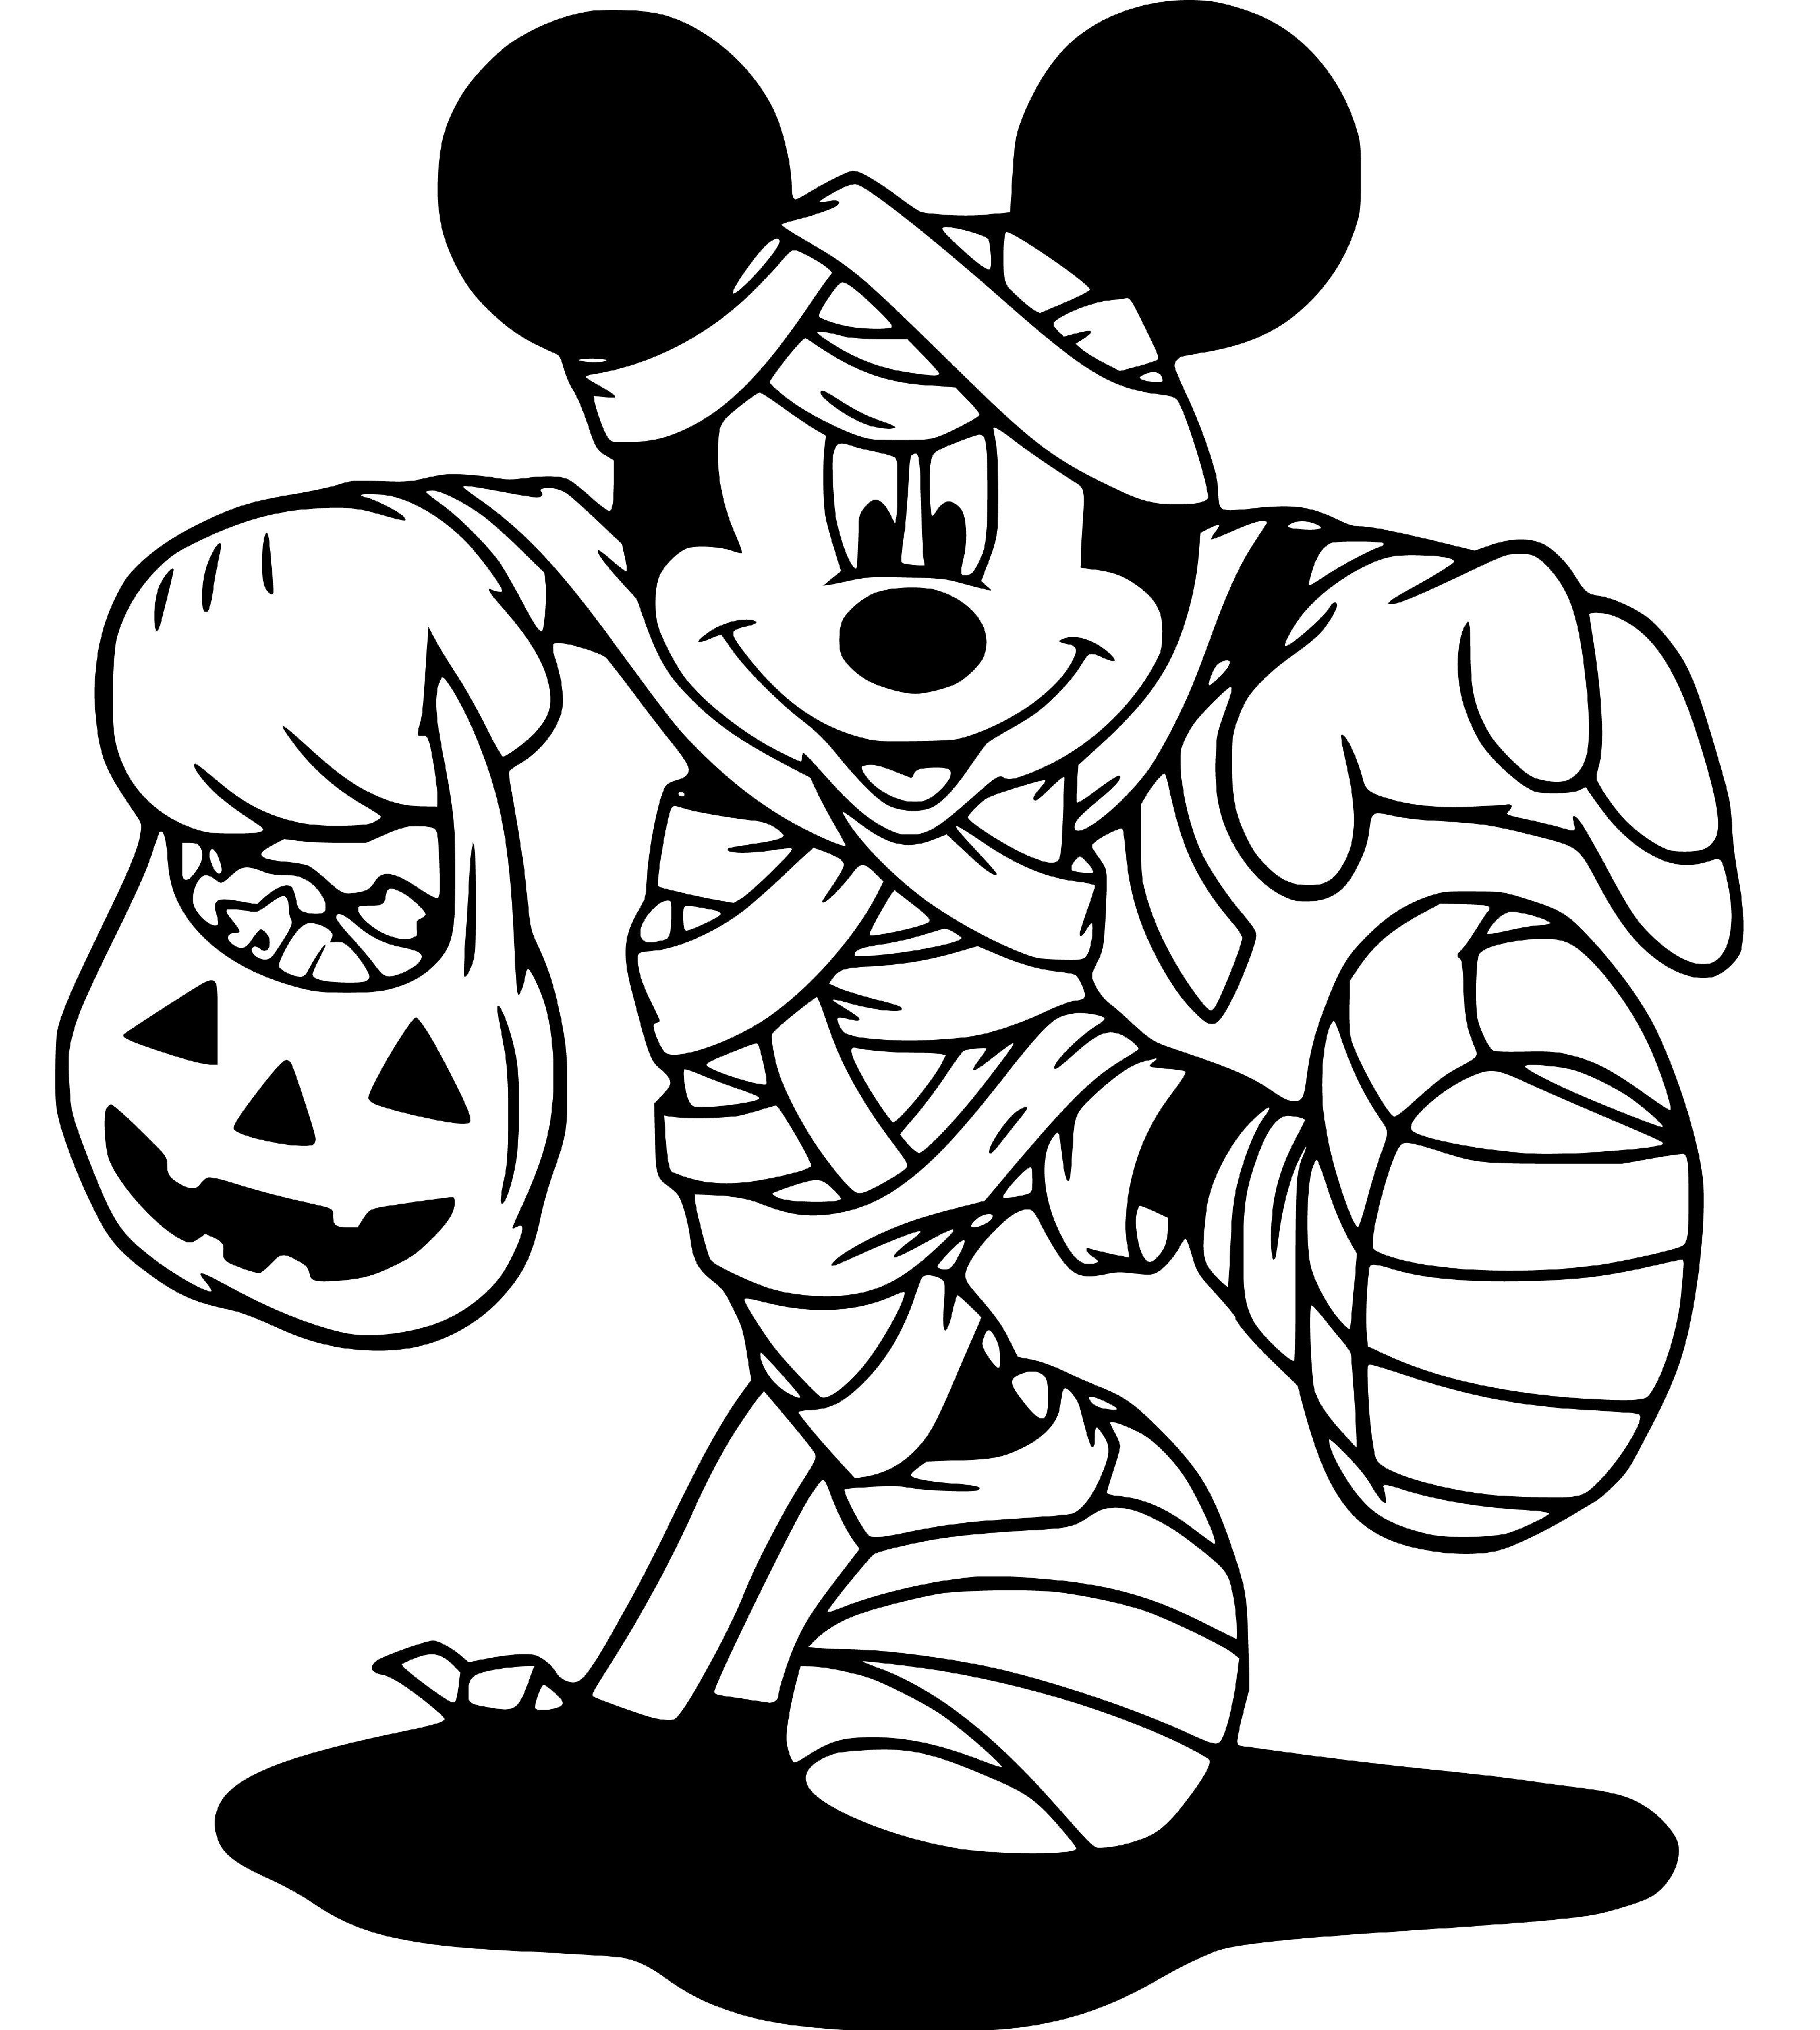 Mickey Mouse holding pumpkin bag Coloring Page - SheetalColor.com